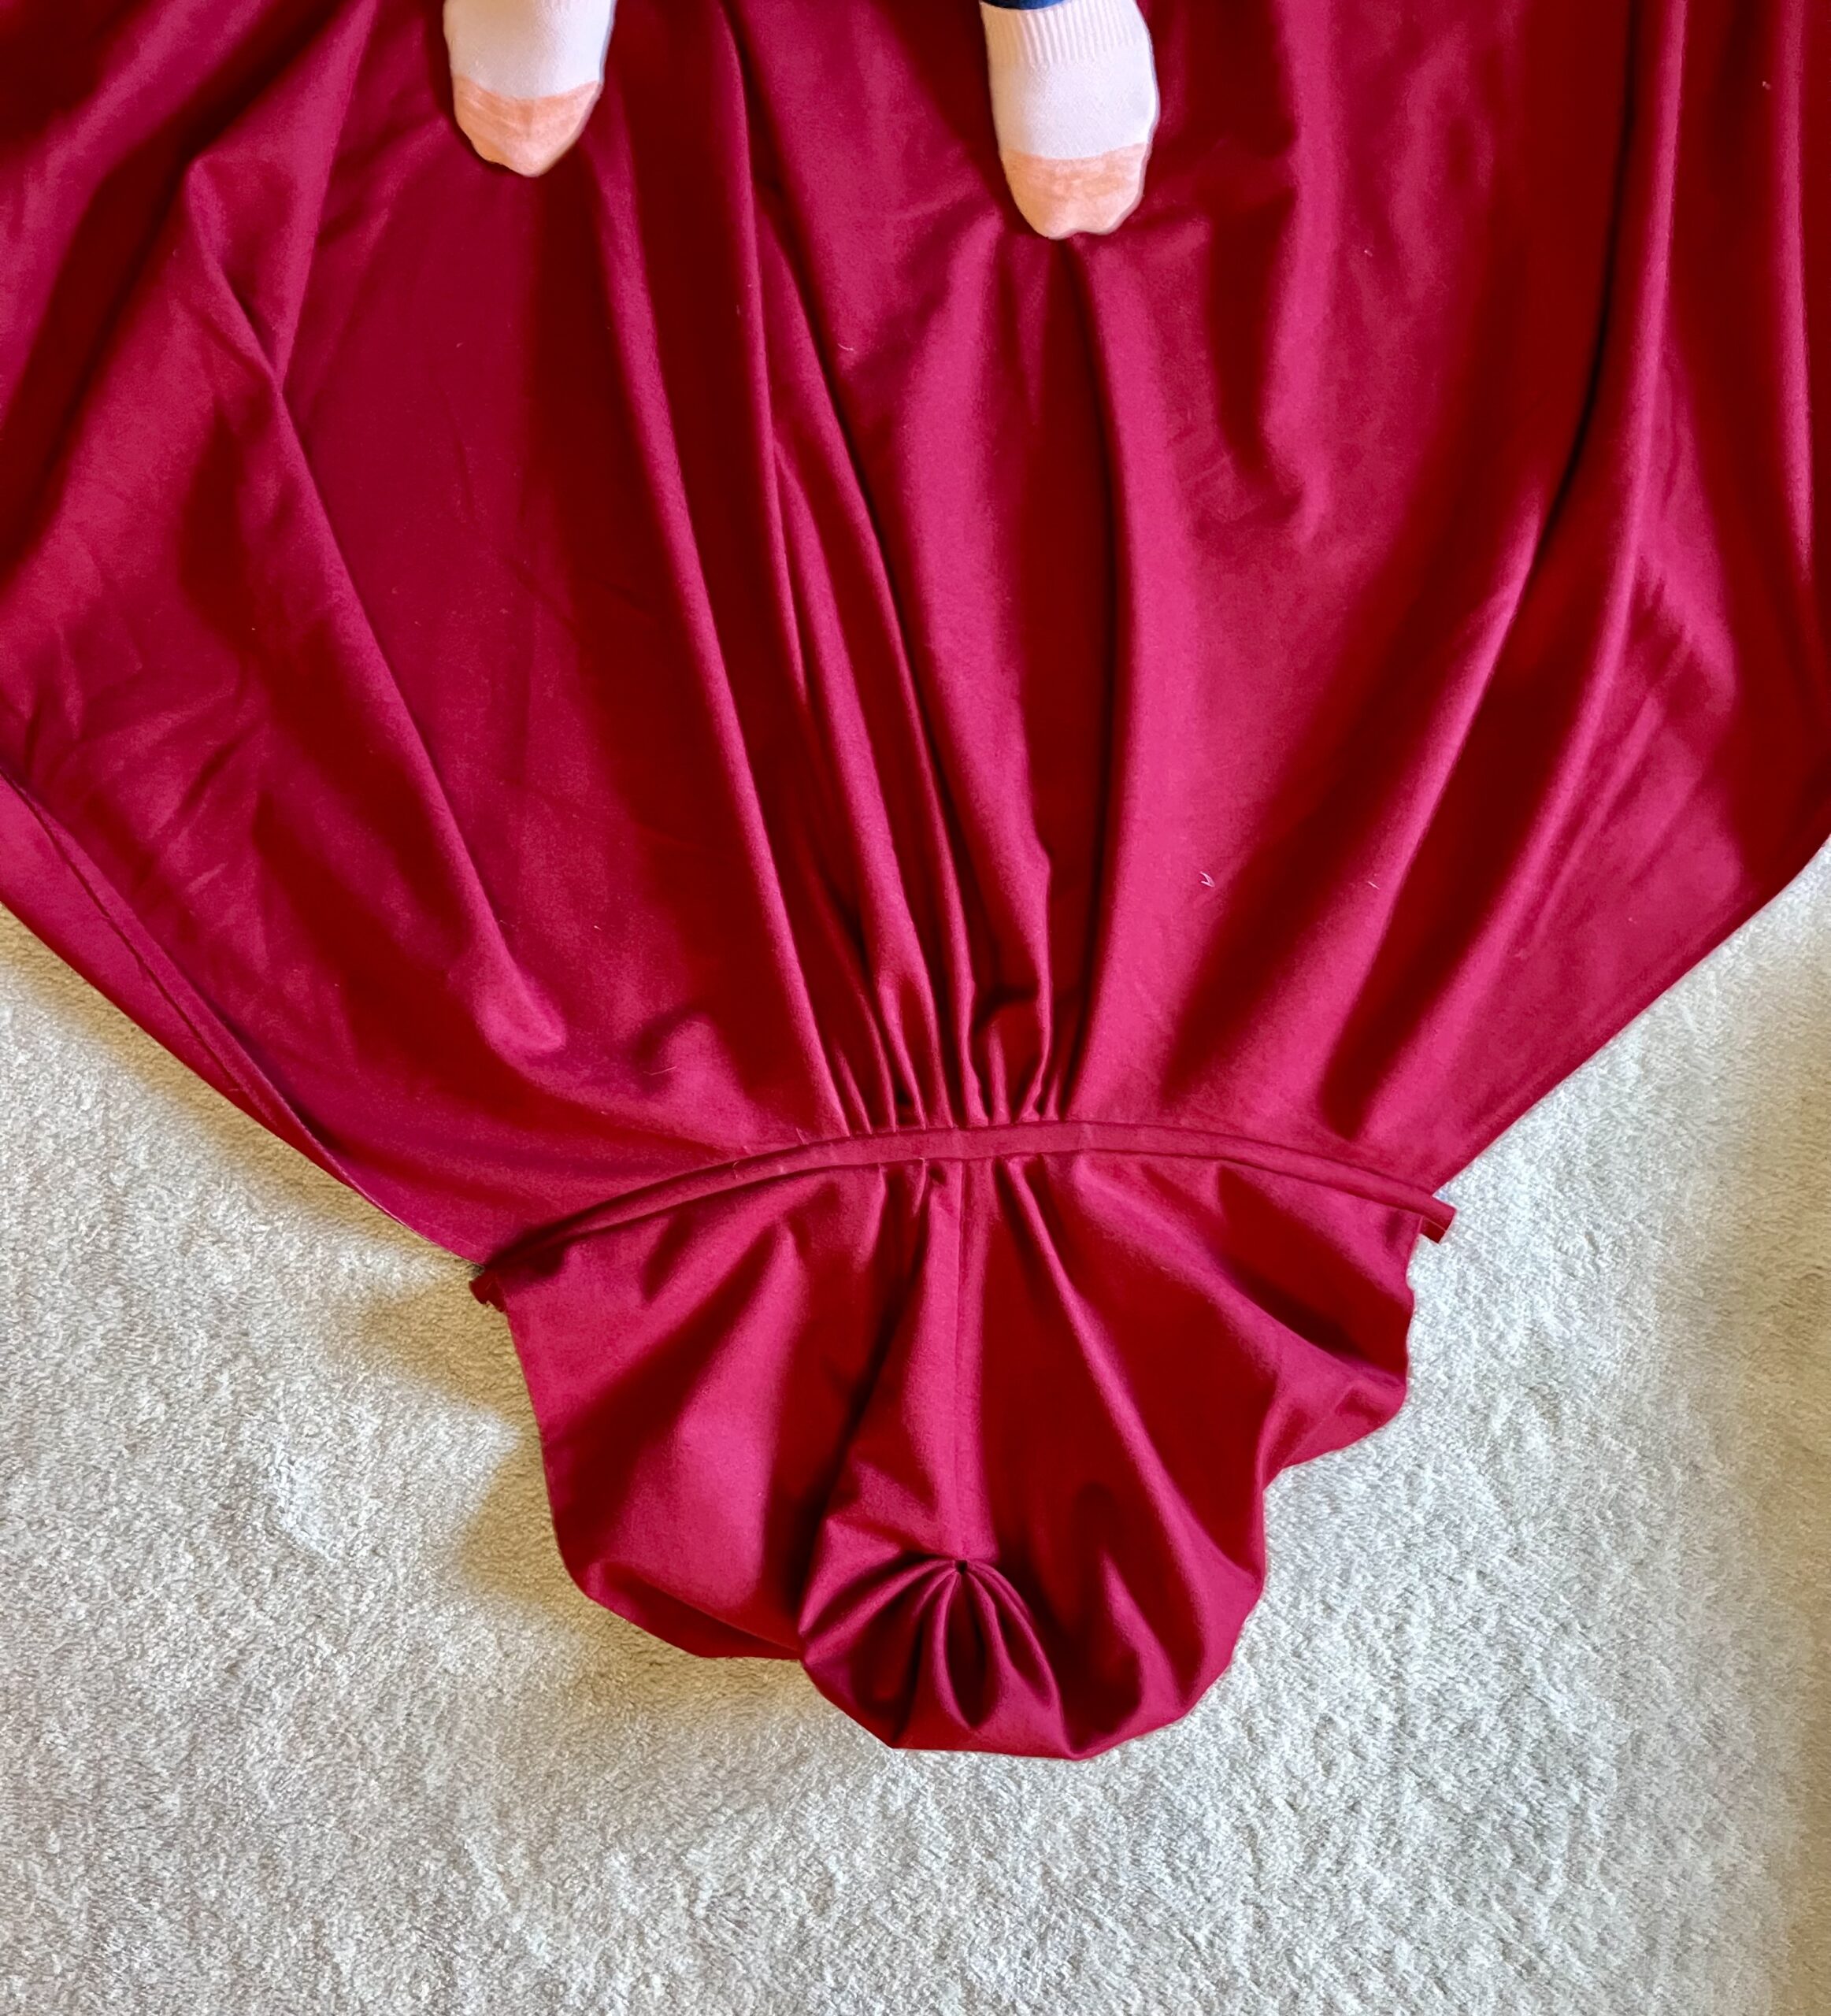 The pleated hood and body of an 18th Centurycardinal cloak lie on a carpet